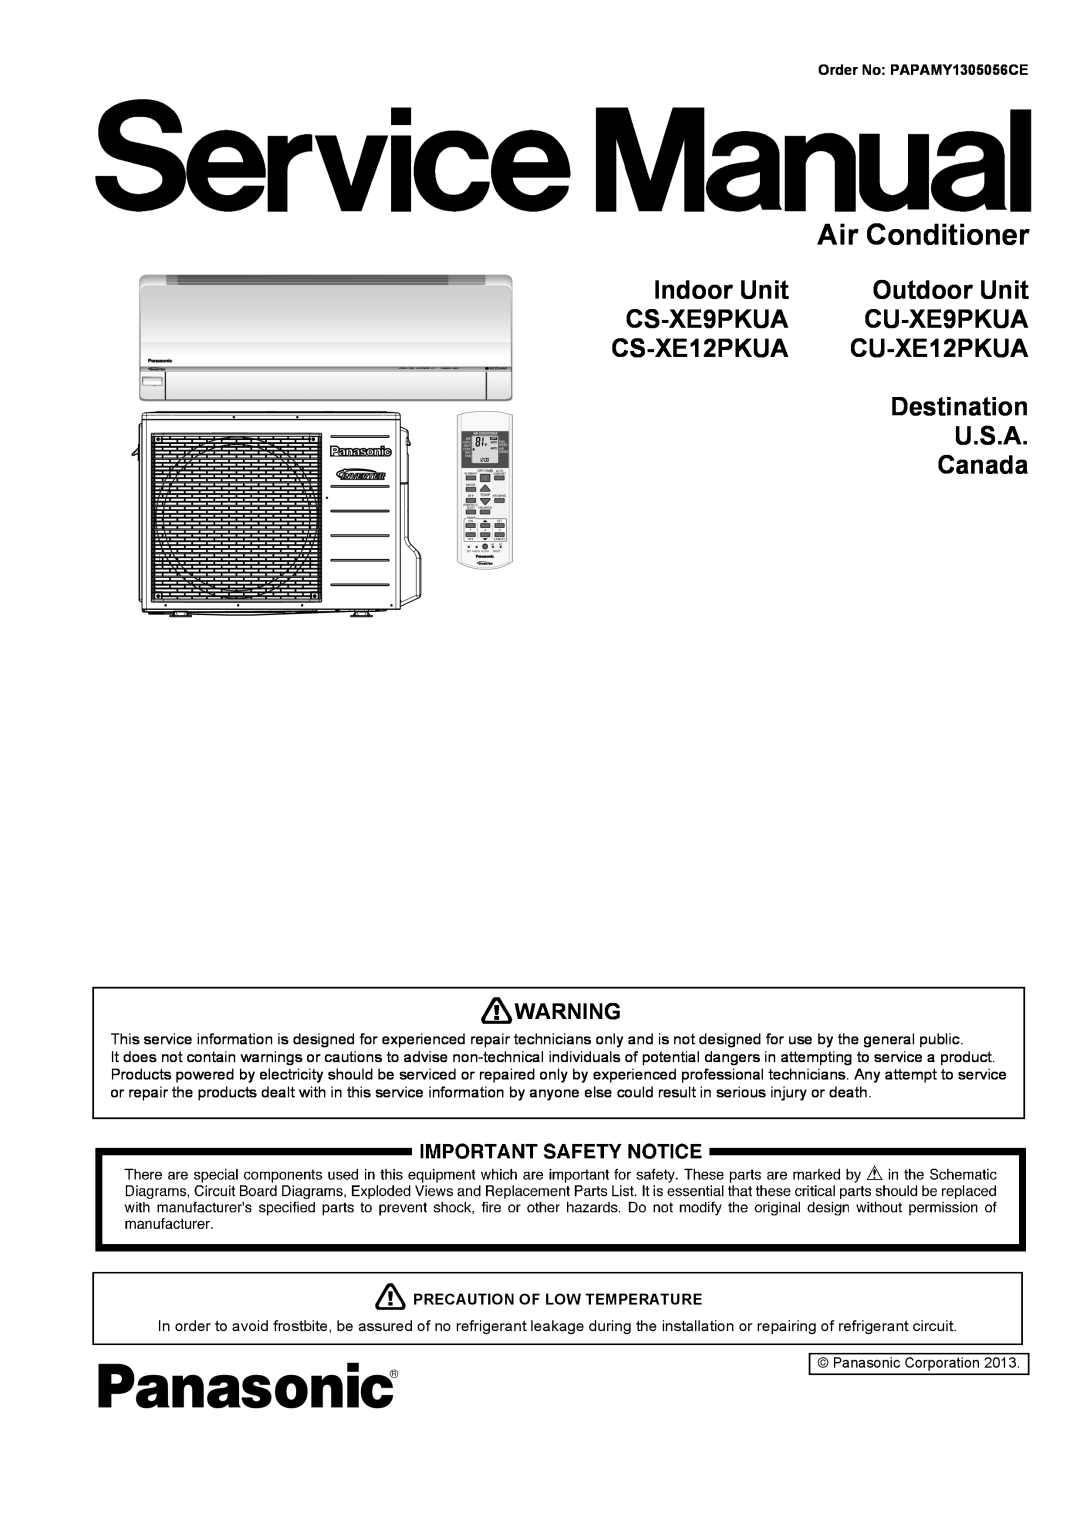 Panasonic CS-XE9PKUA manual Air Conditioner, Indoor Unit, Outdoor Unit, CU-XE9PKUA, CU-XE12PKUA, Destination, U.S.A 